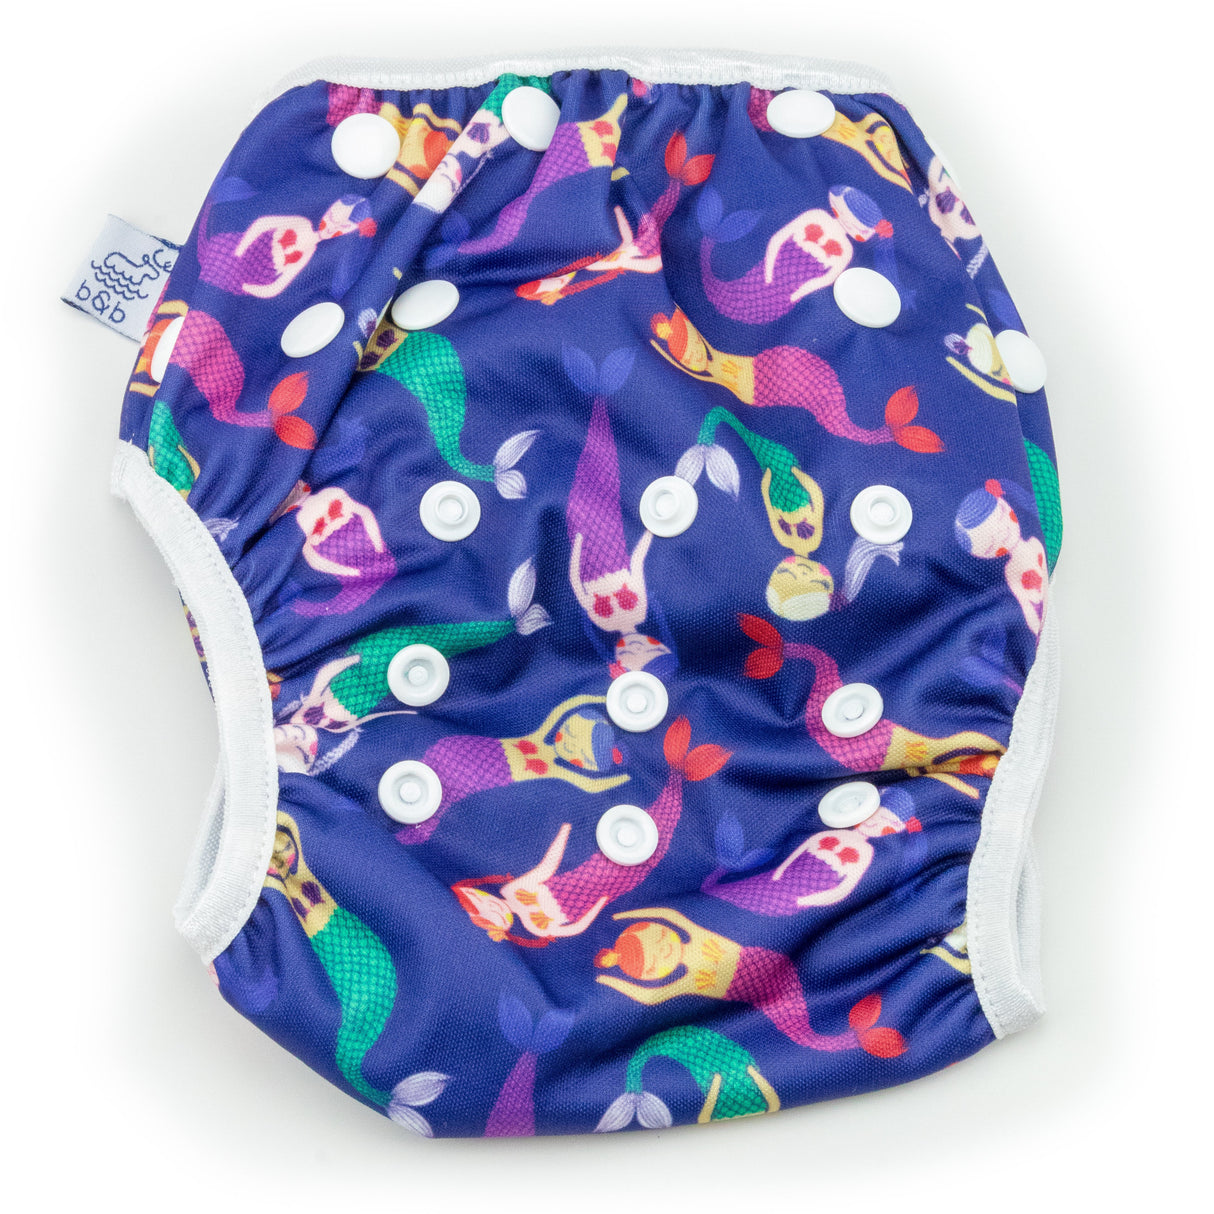 Toddler Size Mermaids Reusable Swim Diaper, Adjustable 2-5 Years by Beau & Belle Littles